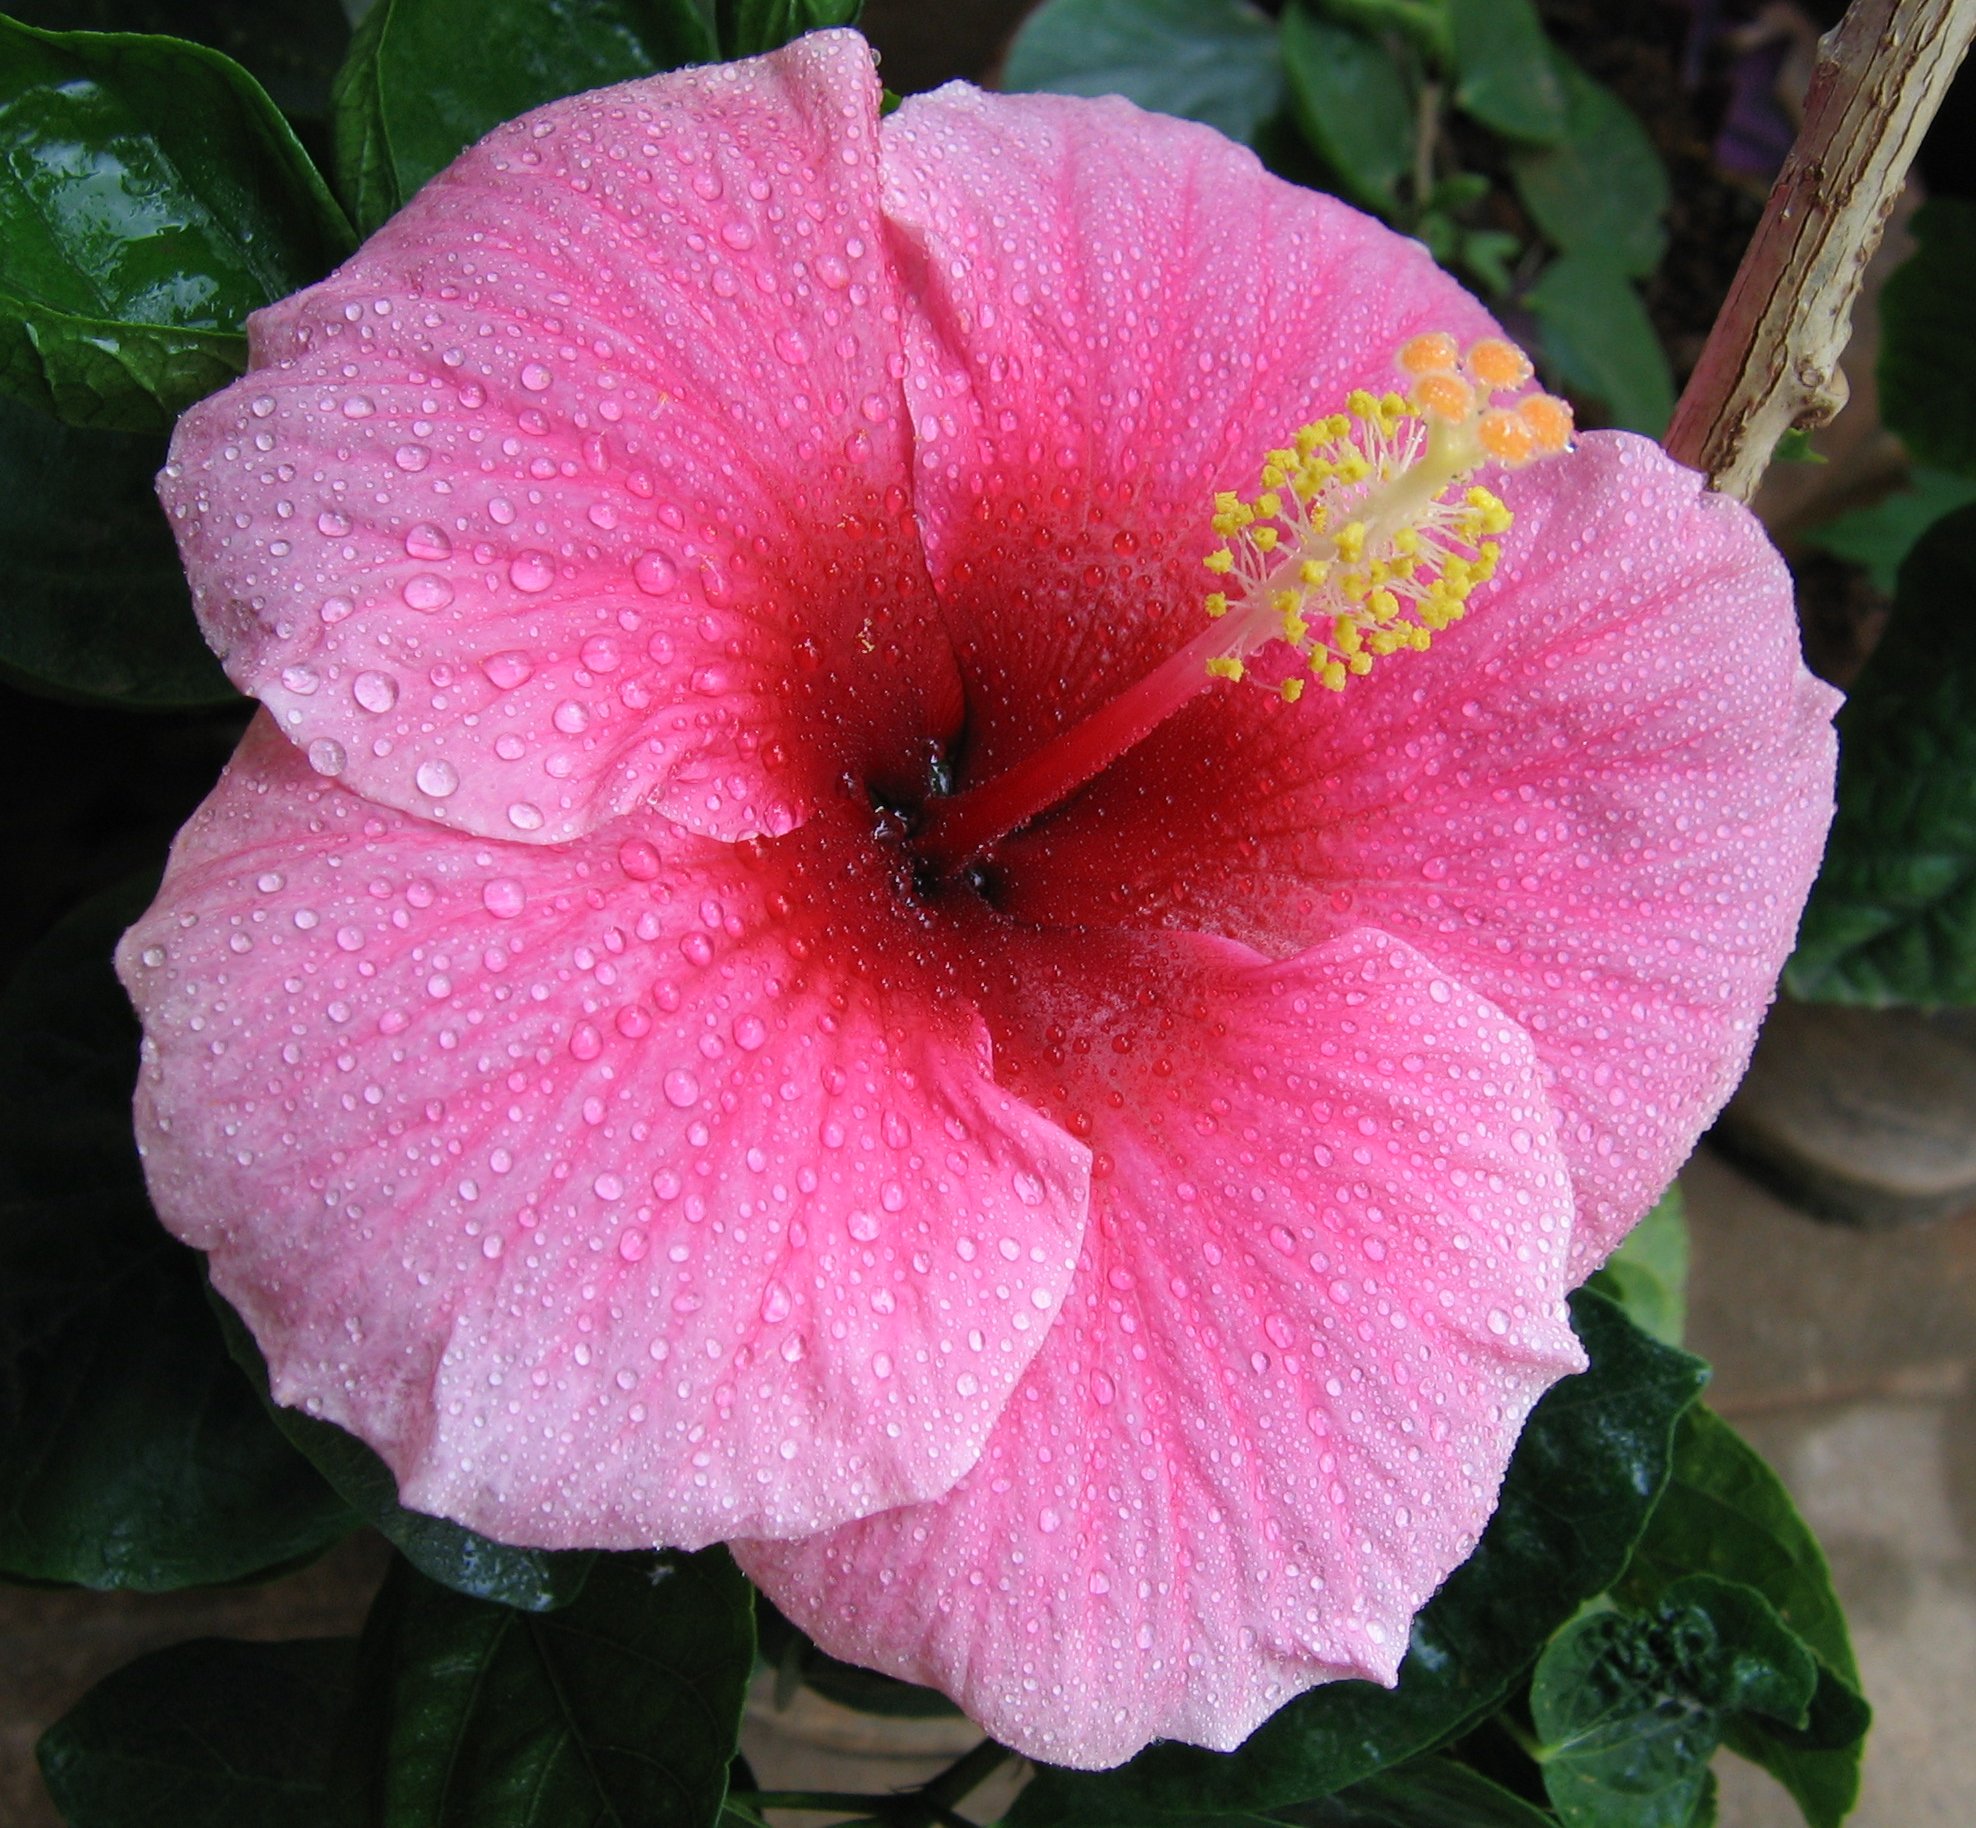 File:Hibiscus pink.jpg - Wikipedia